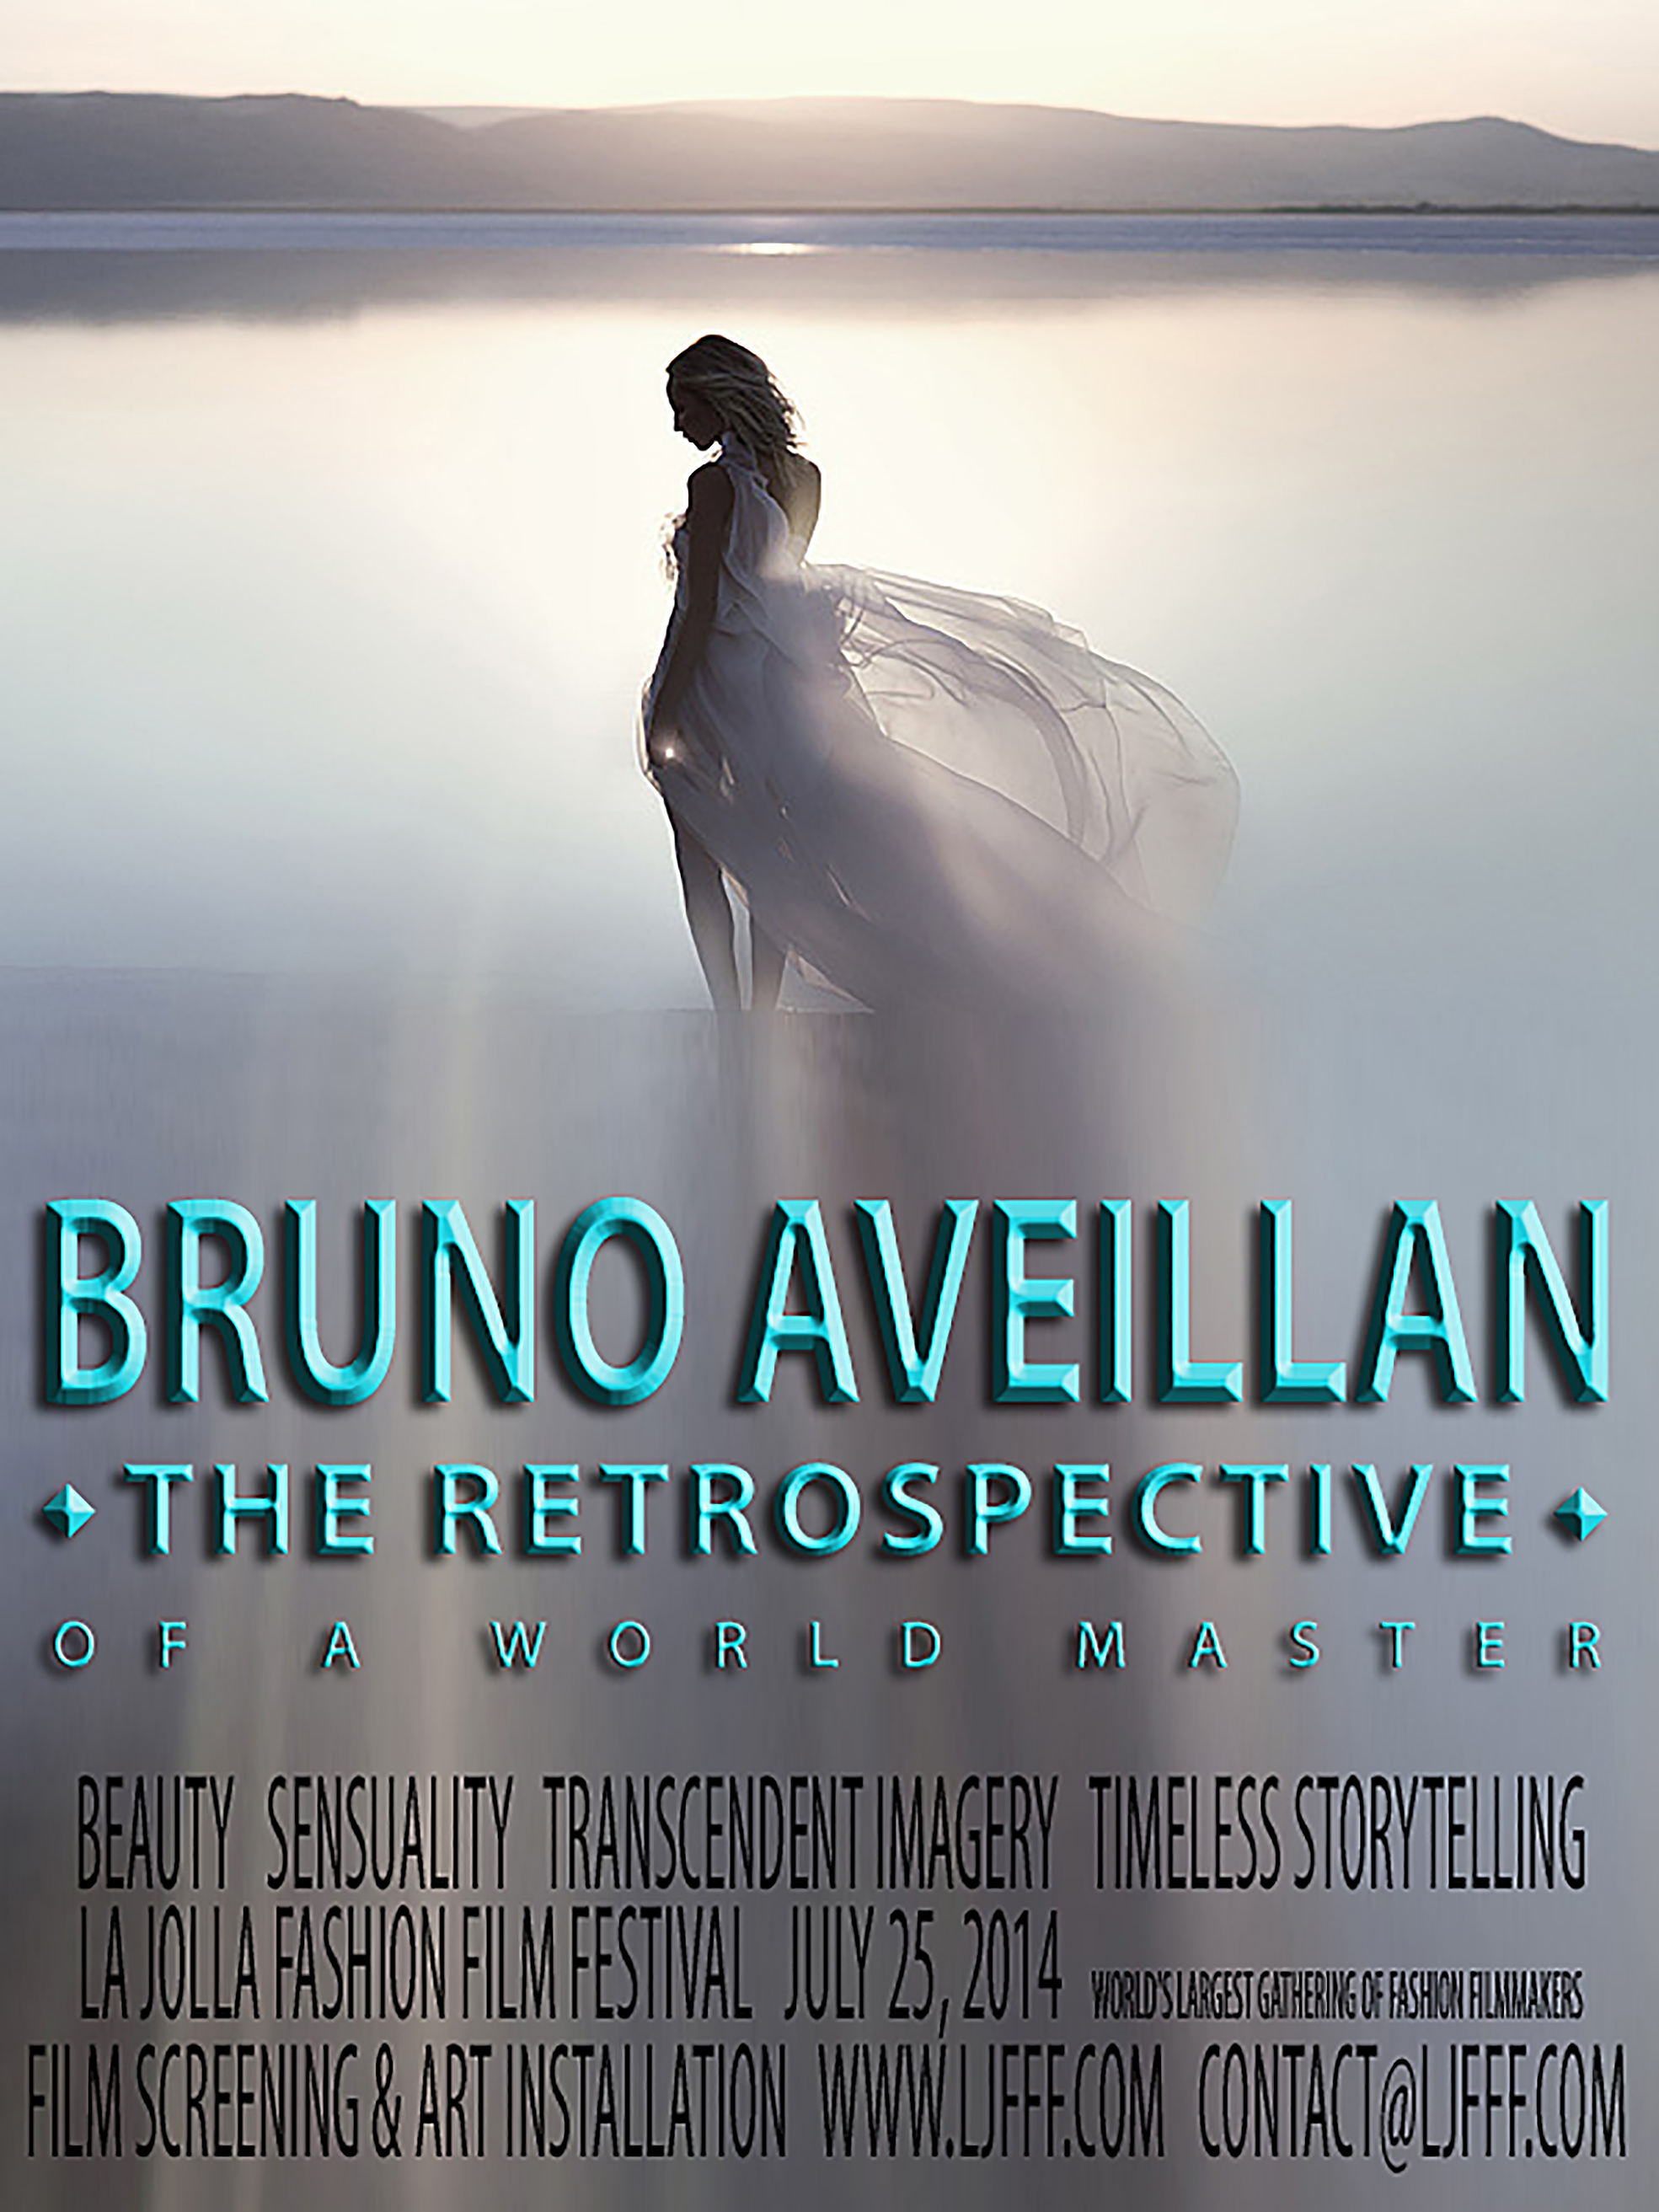 Bruno Aveillan LJIFFF Poster 2014